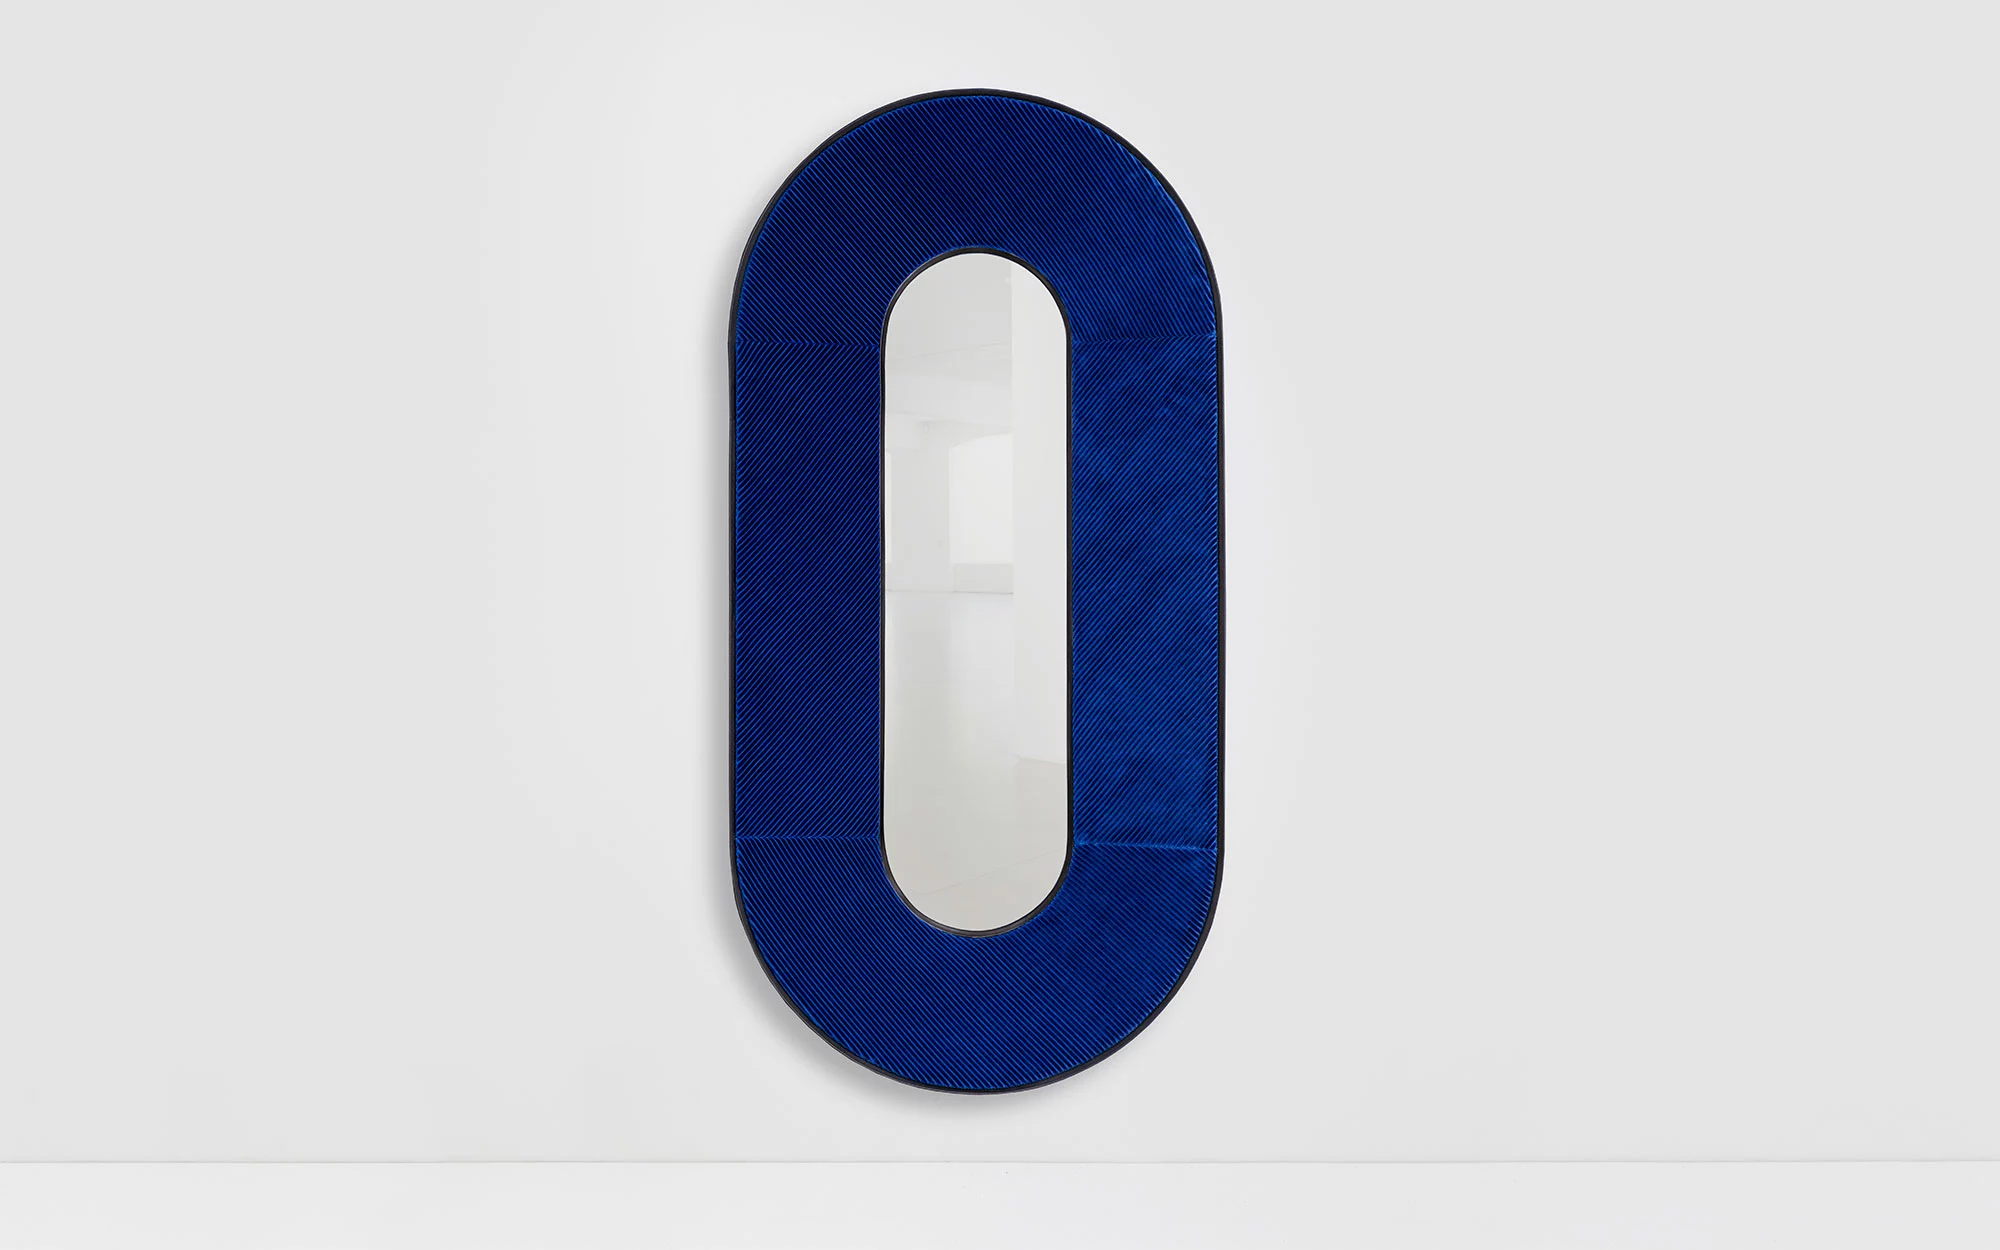 Apollo mirror - Jean-Baptiste Fastrez - Pendant light - Galerie kreo